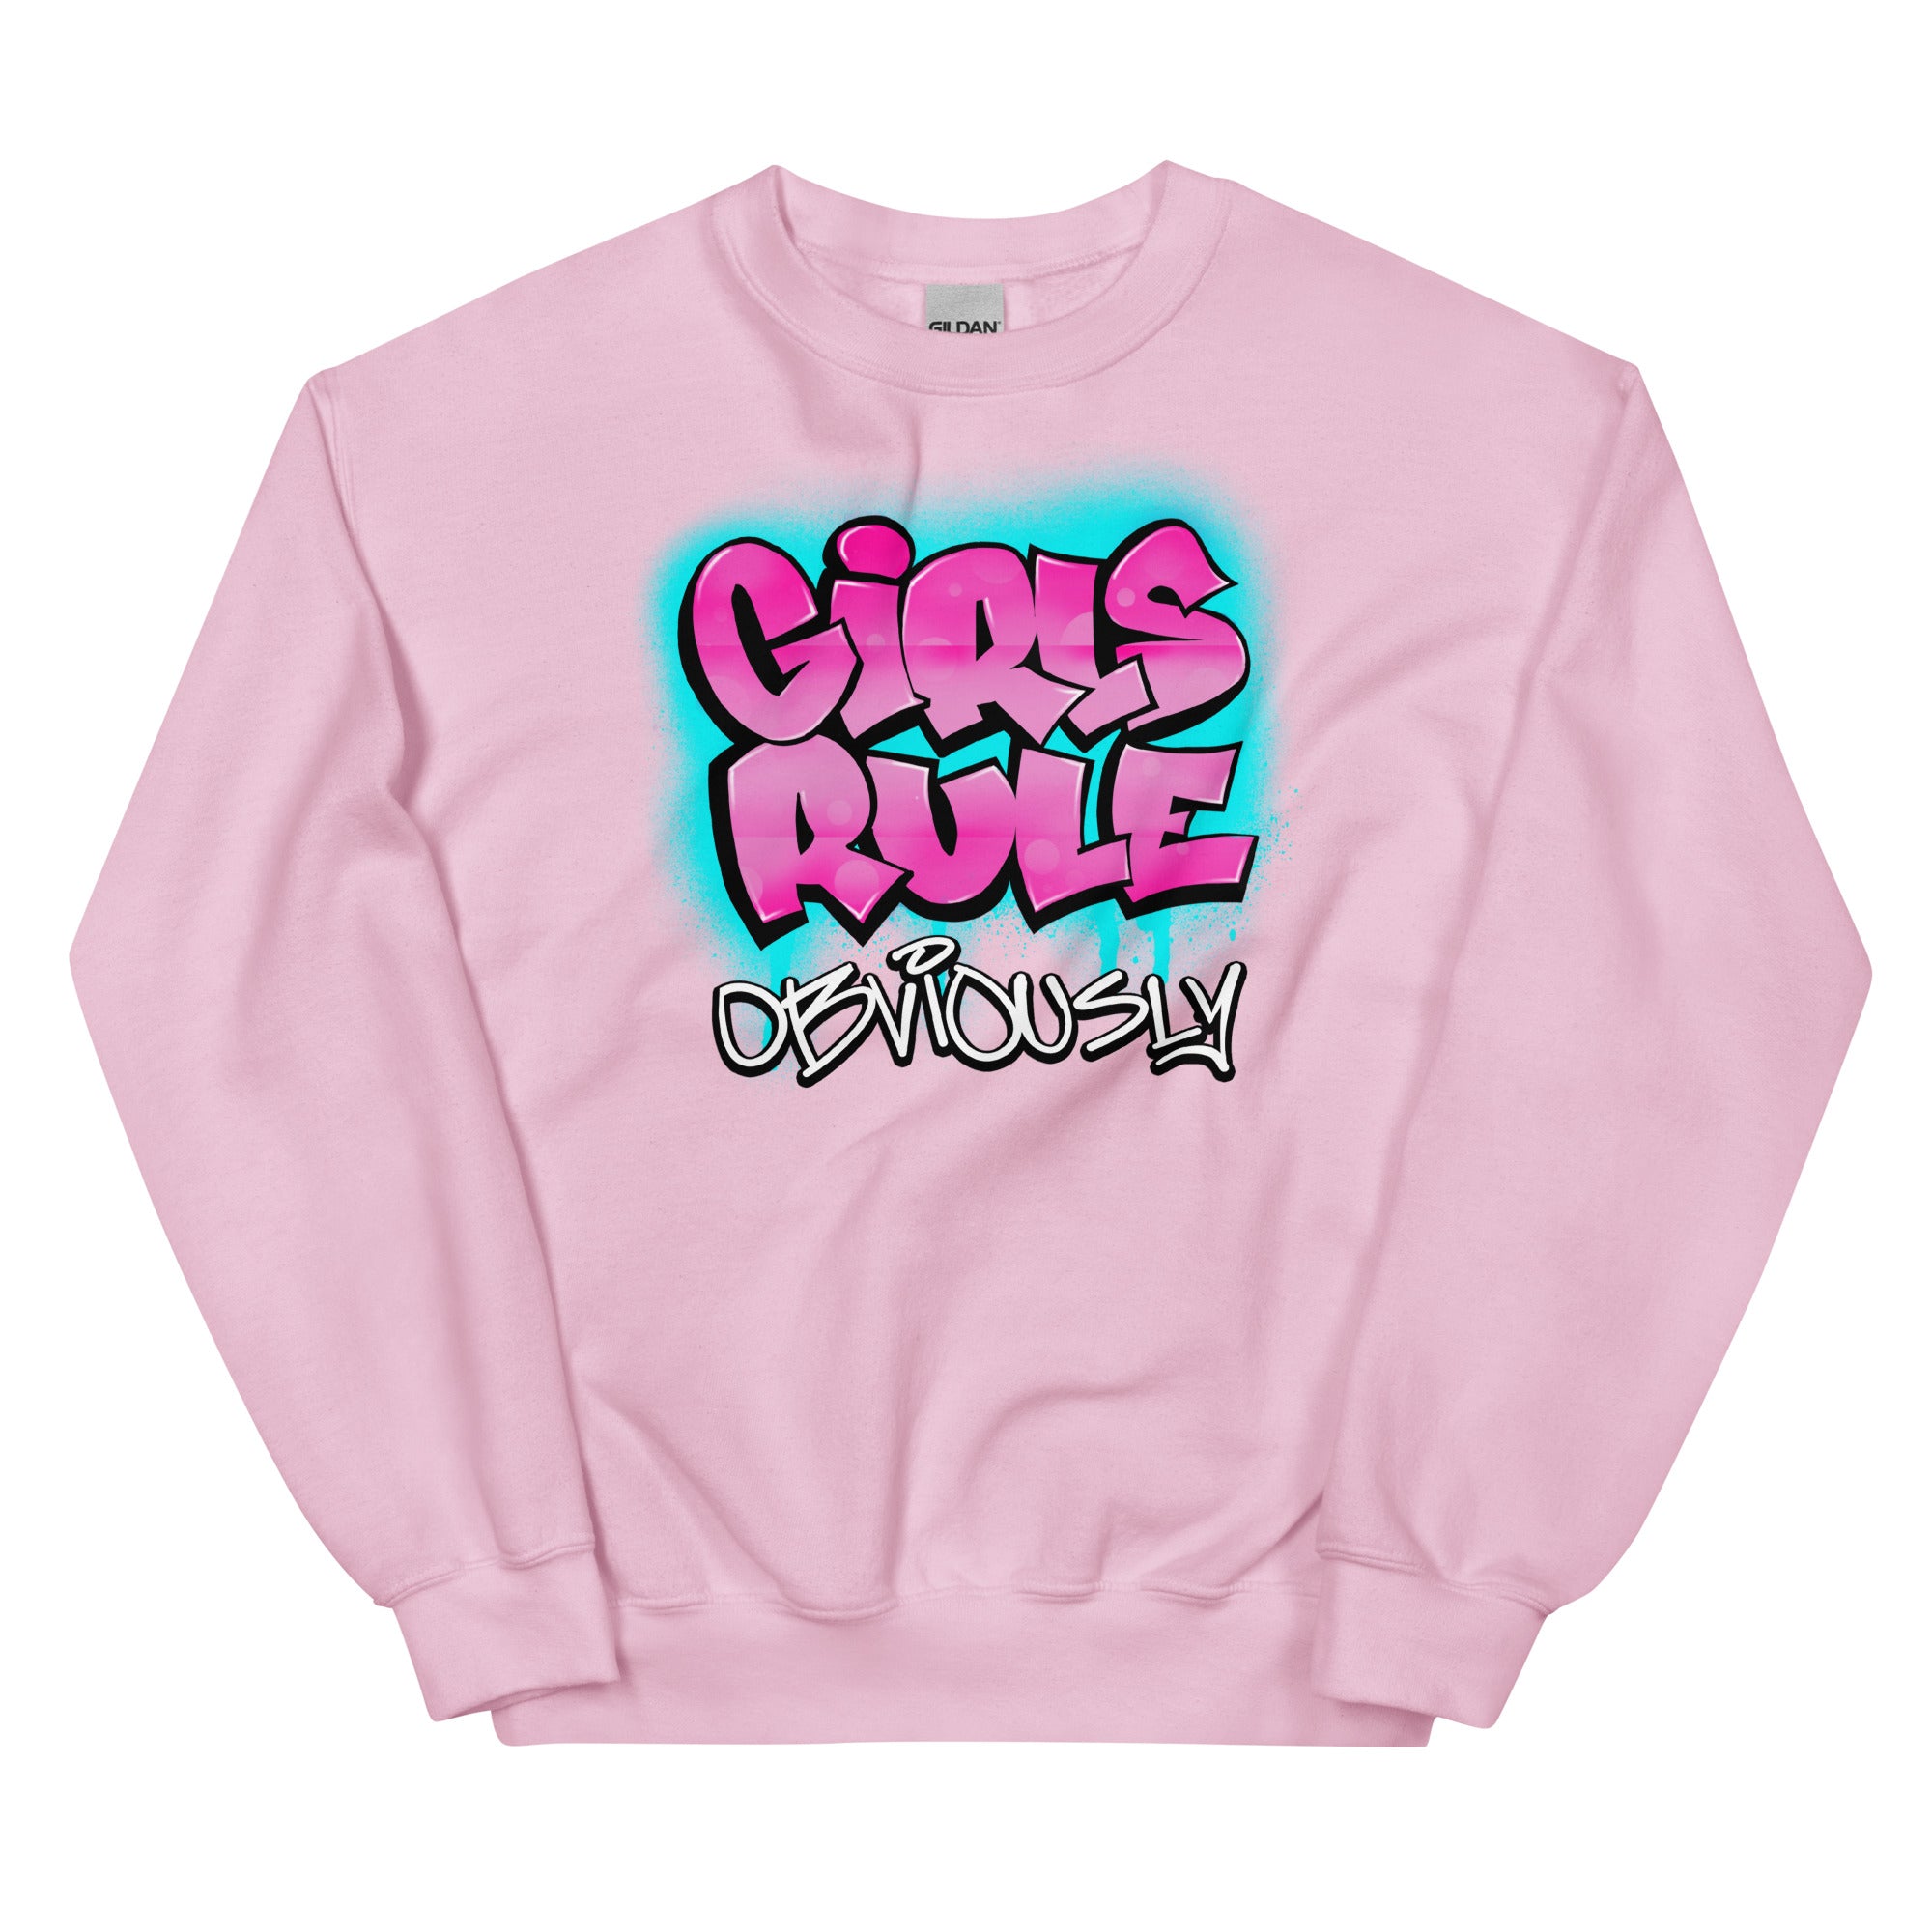 GIRLS RULE OBVIOUSLY - Unisex Sweatshirt - Beats 4 Hope